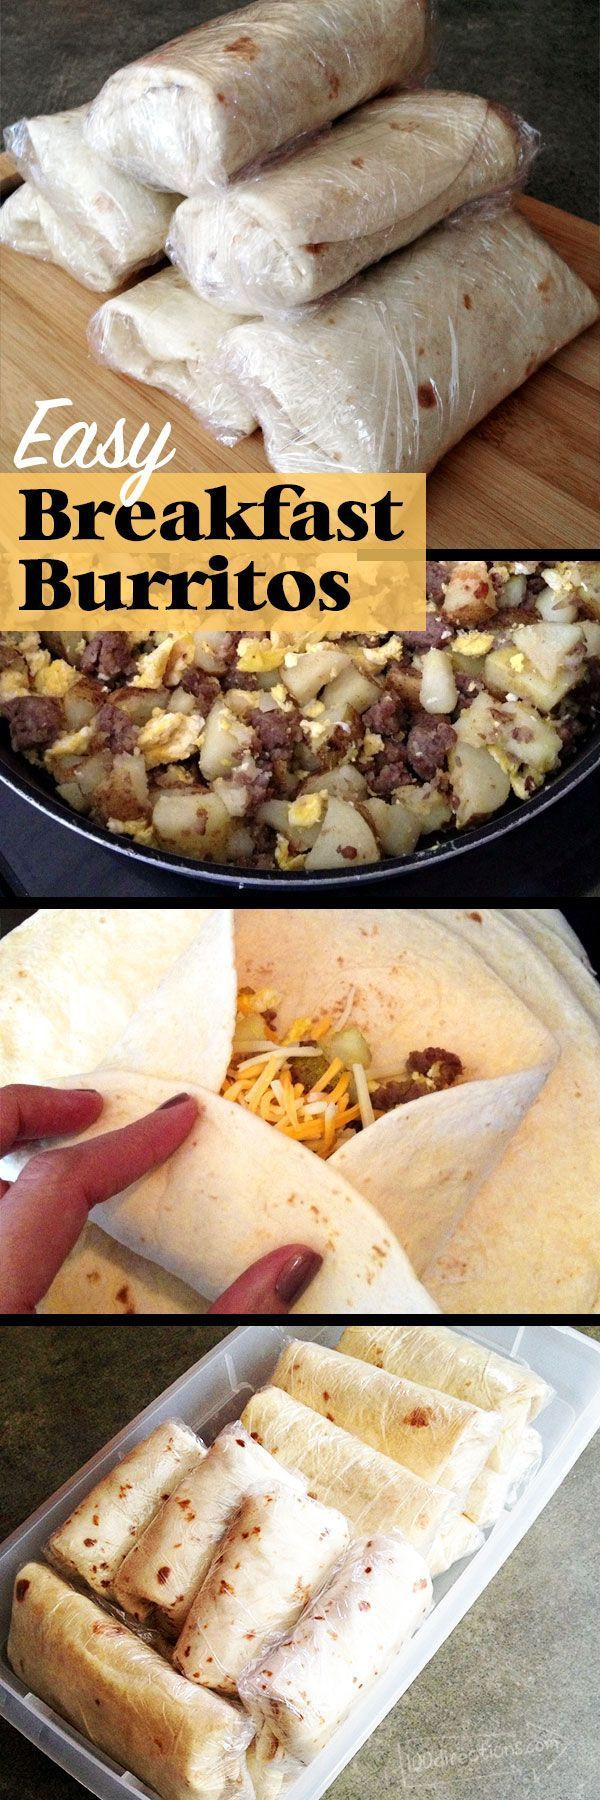 Easy Breakfast Burrito Recipe
 How to Make Quick and Easy Breakfast Burritos